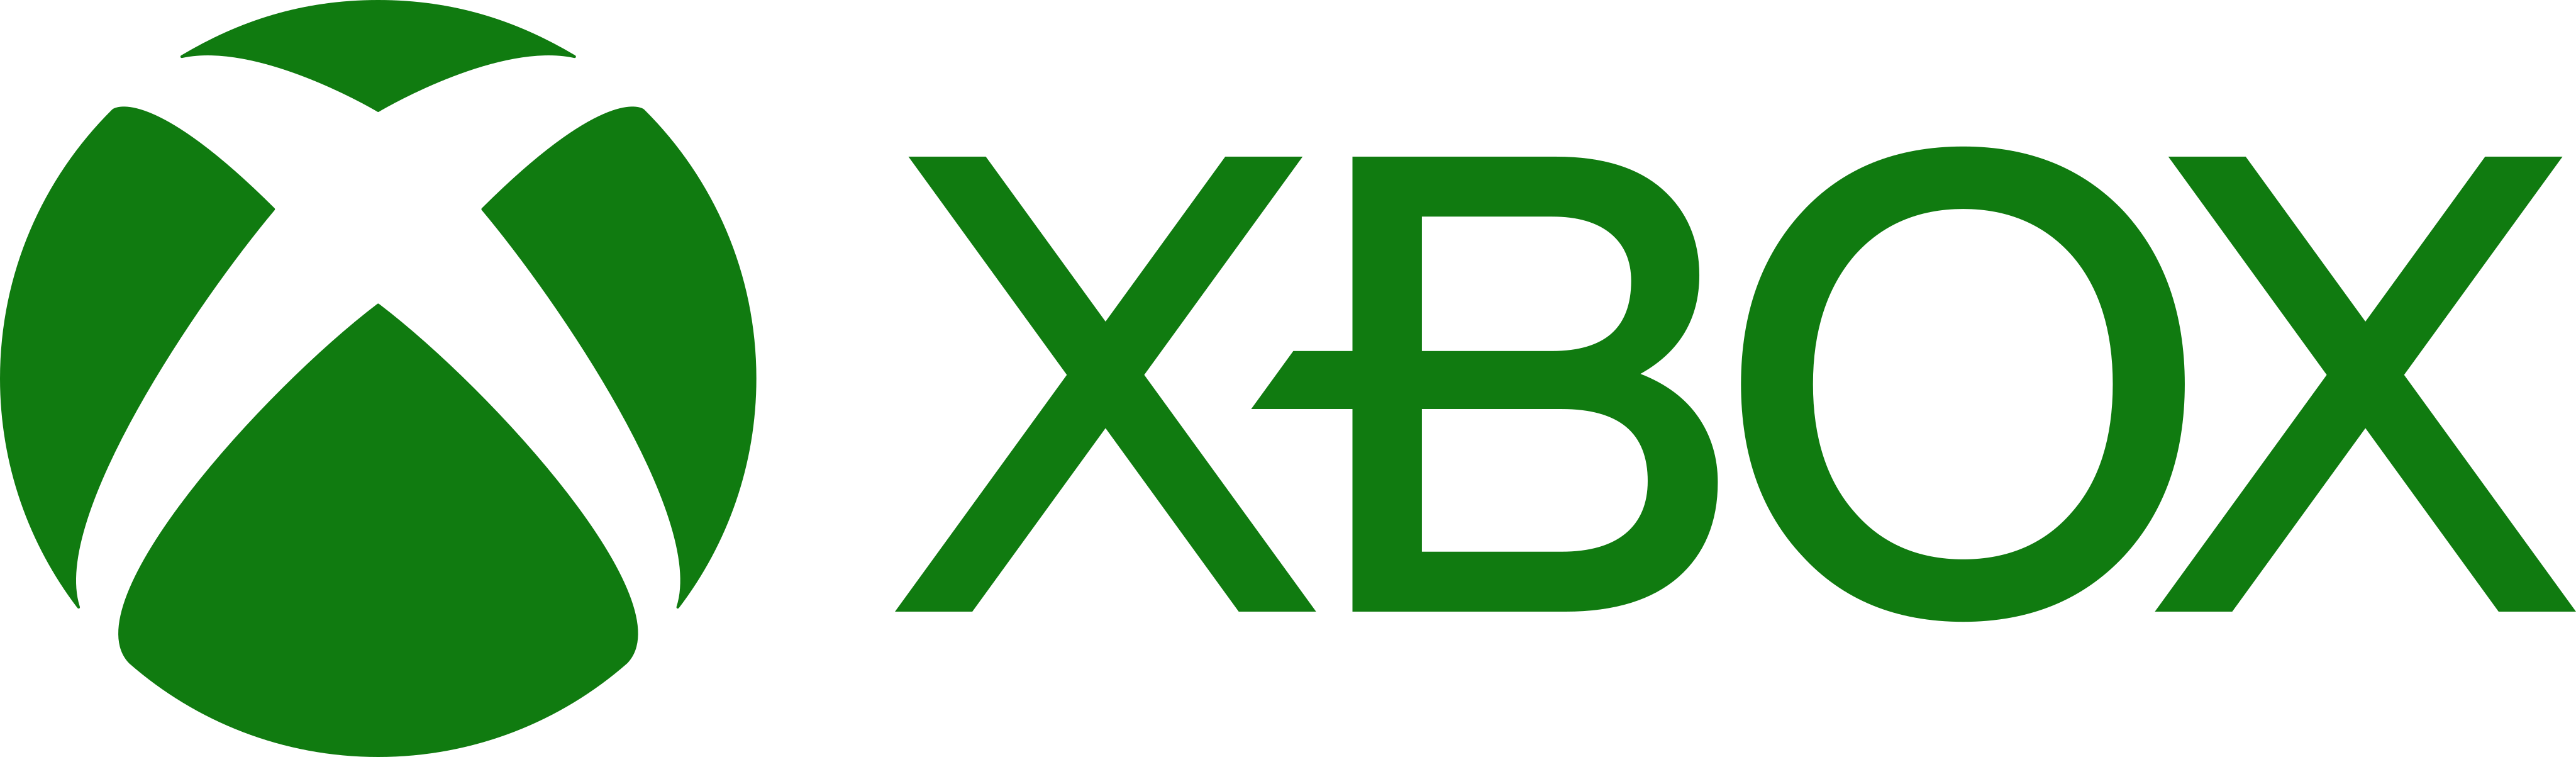 xbox logo 8 - Xbox Logo